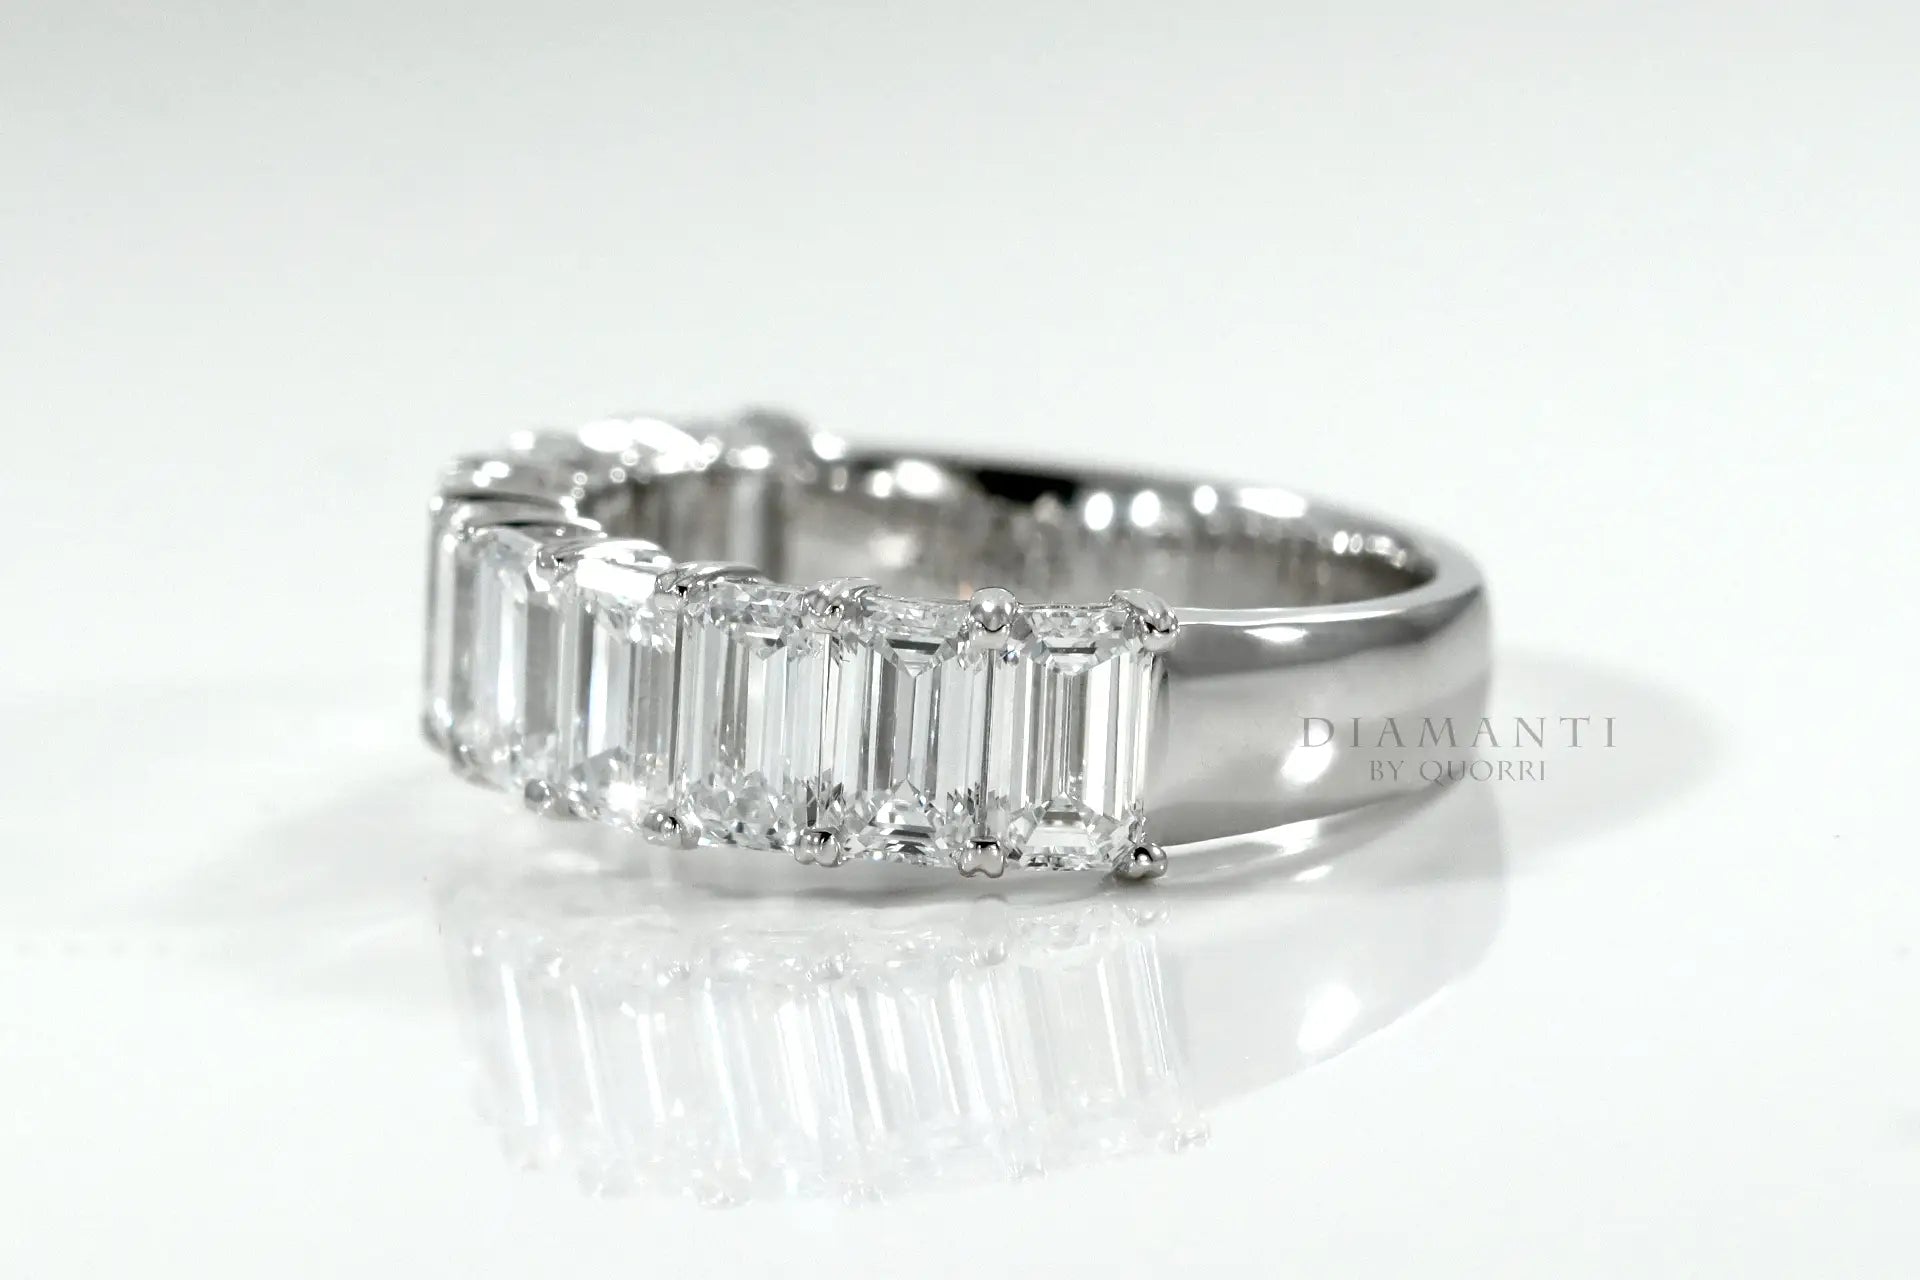 designer 18k white gold emerald cut diamond wedding and anniversary ring at Quorri